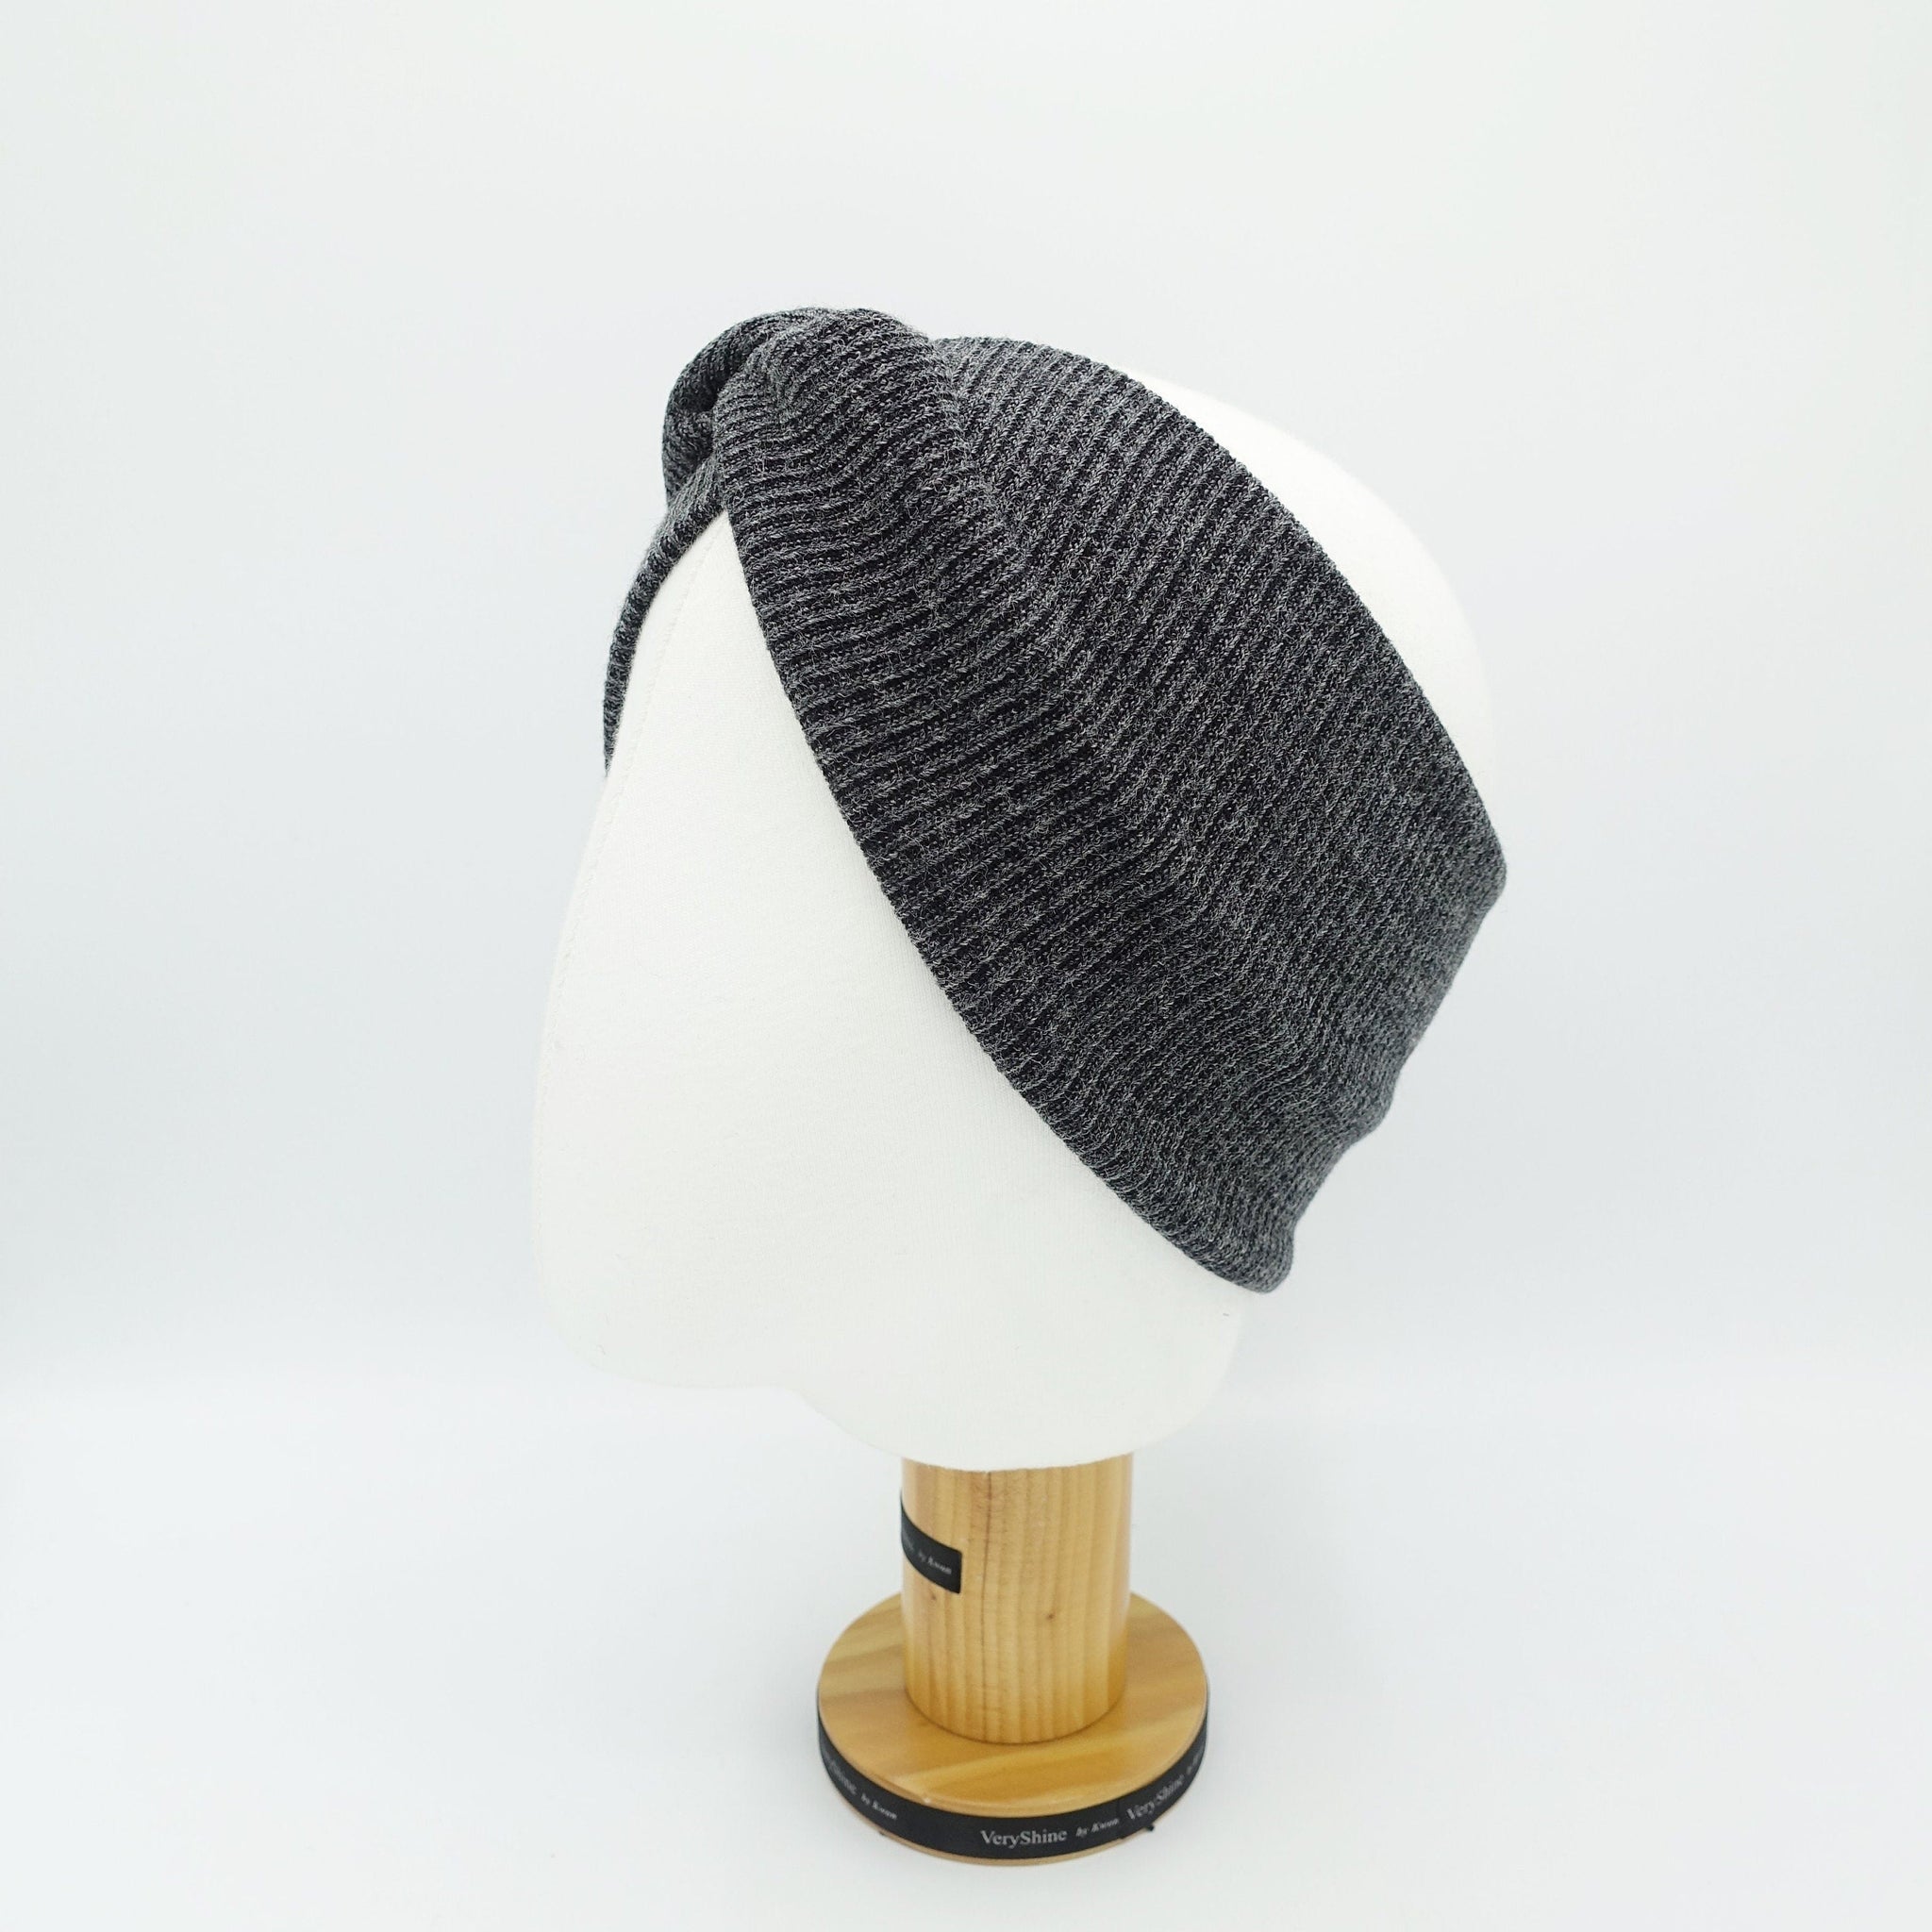 veryshine.com Headband Charcoal knit headband corrugated headwrap multi-functional Fall Winter neck warmer